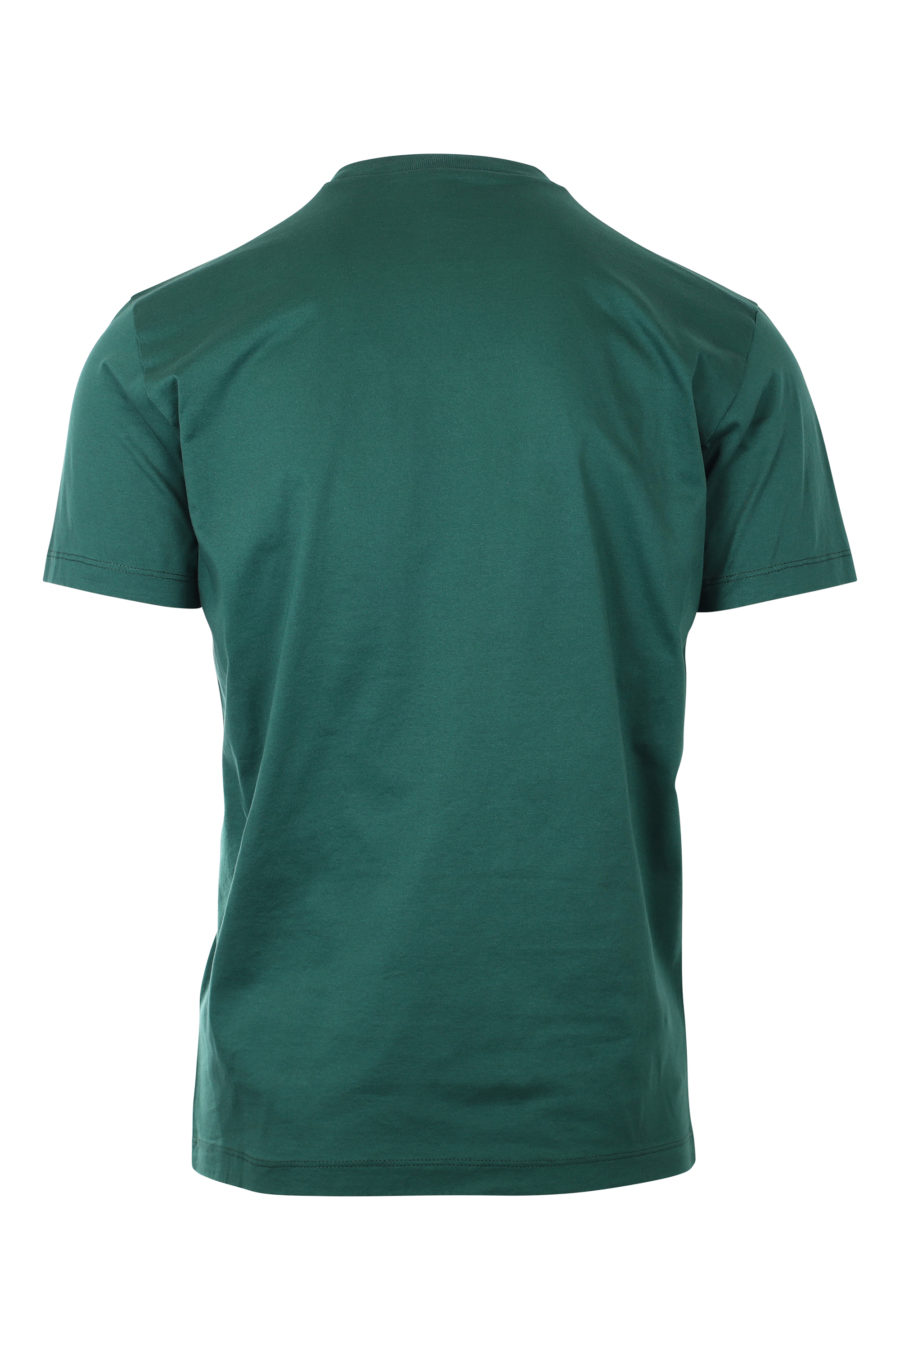 T-shirt verde com o logótipo "icon" - IMG 9744